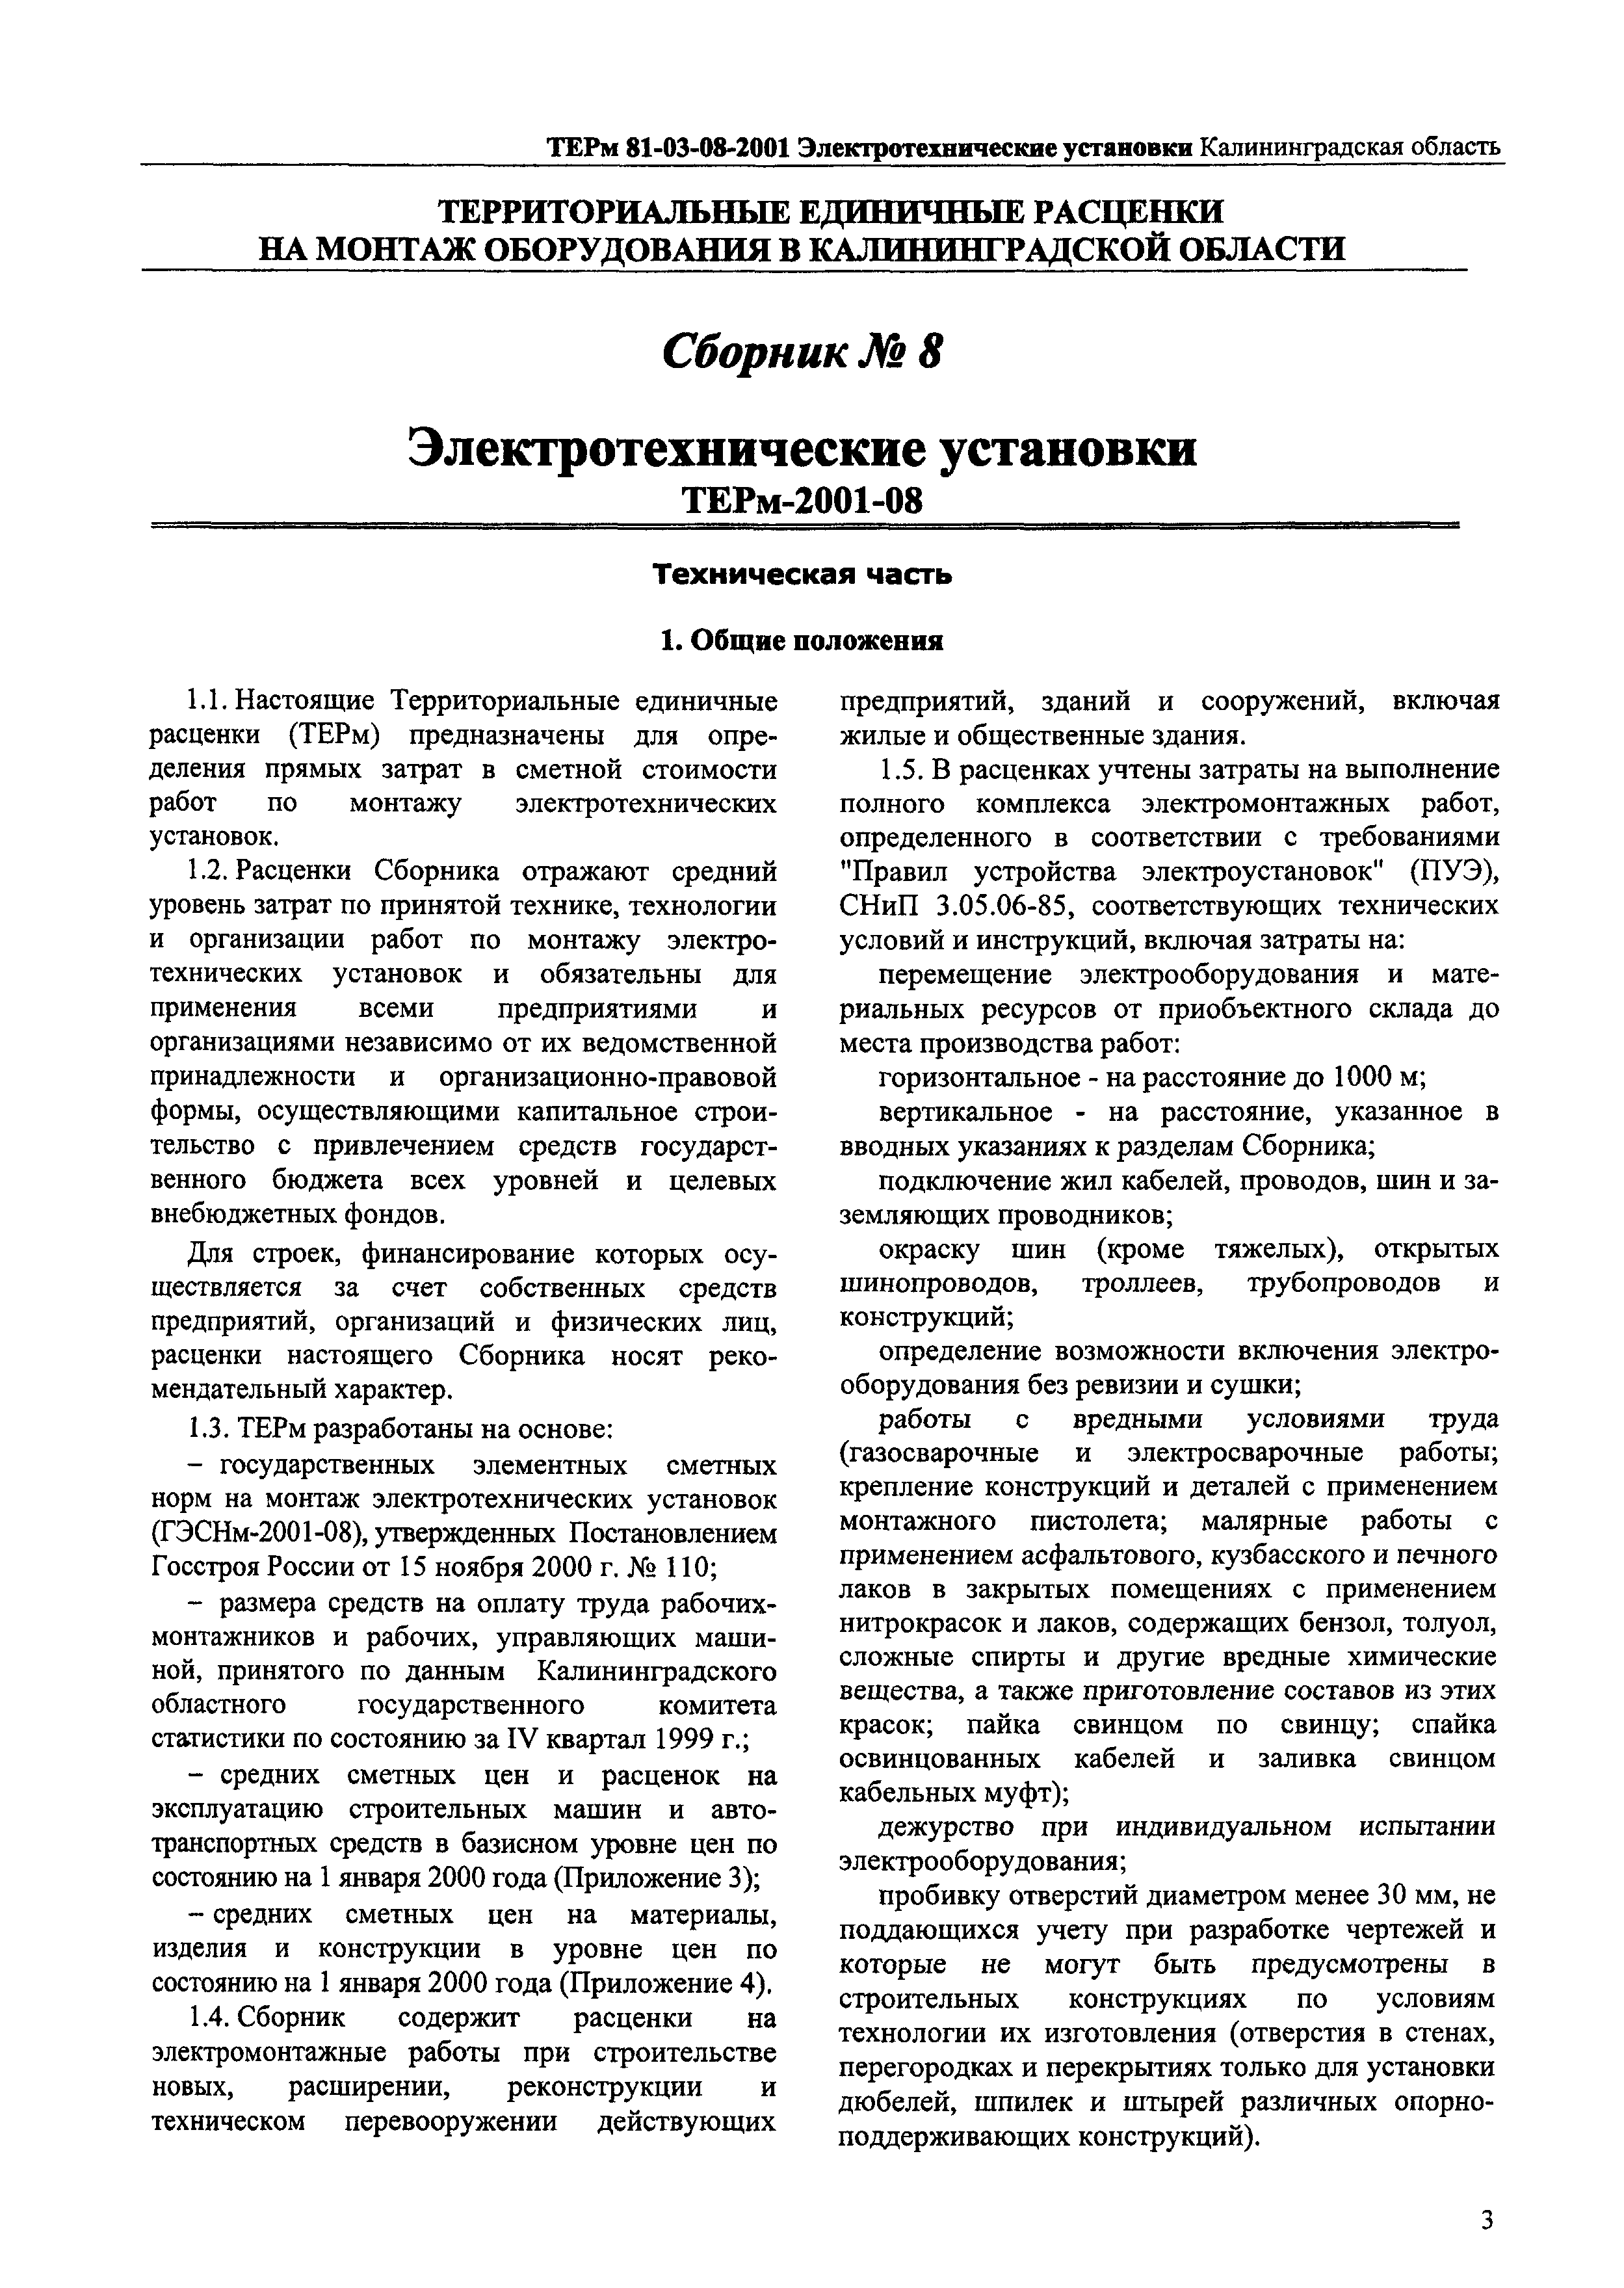 ТЕРм Калининградской области 2001-08